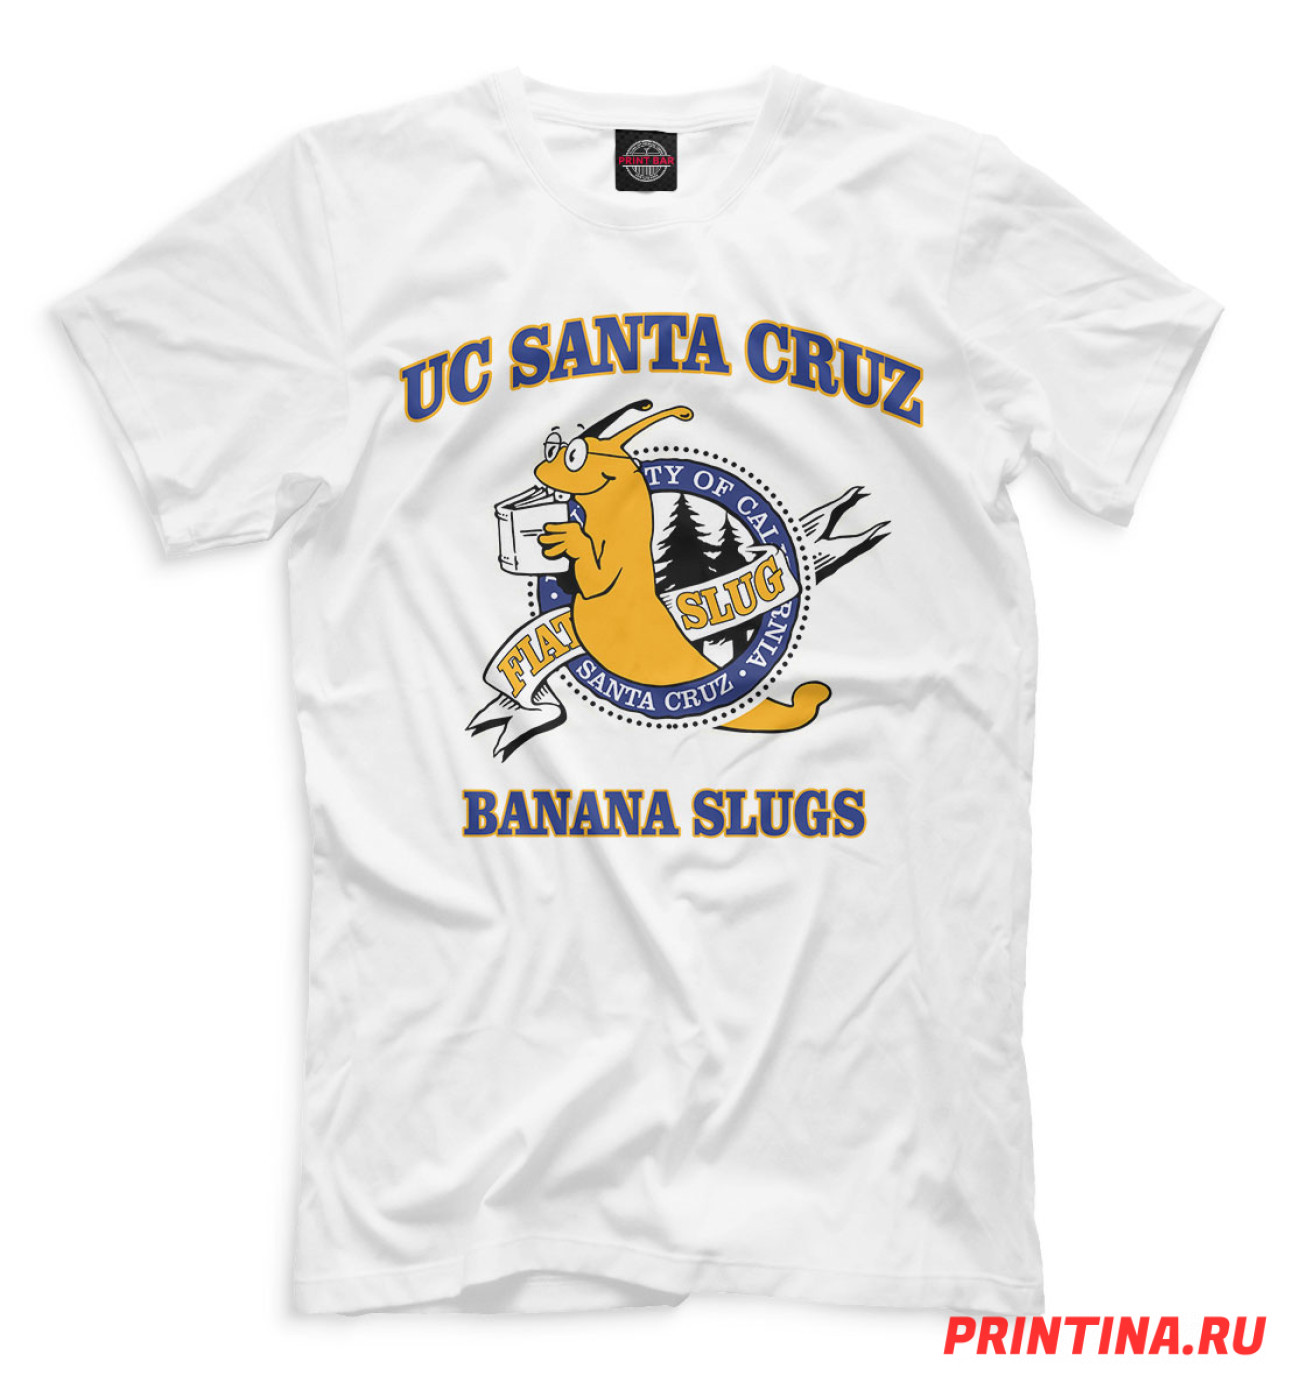 Мужская Футболка UC Santa Cruz Banana Slugs, артикул: KML-116715-fut-2